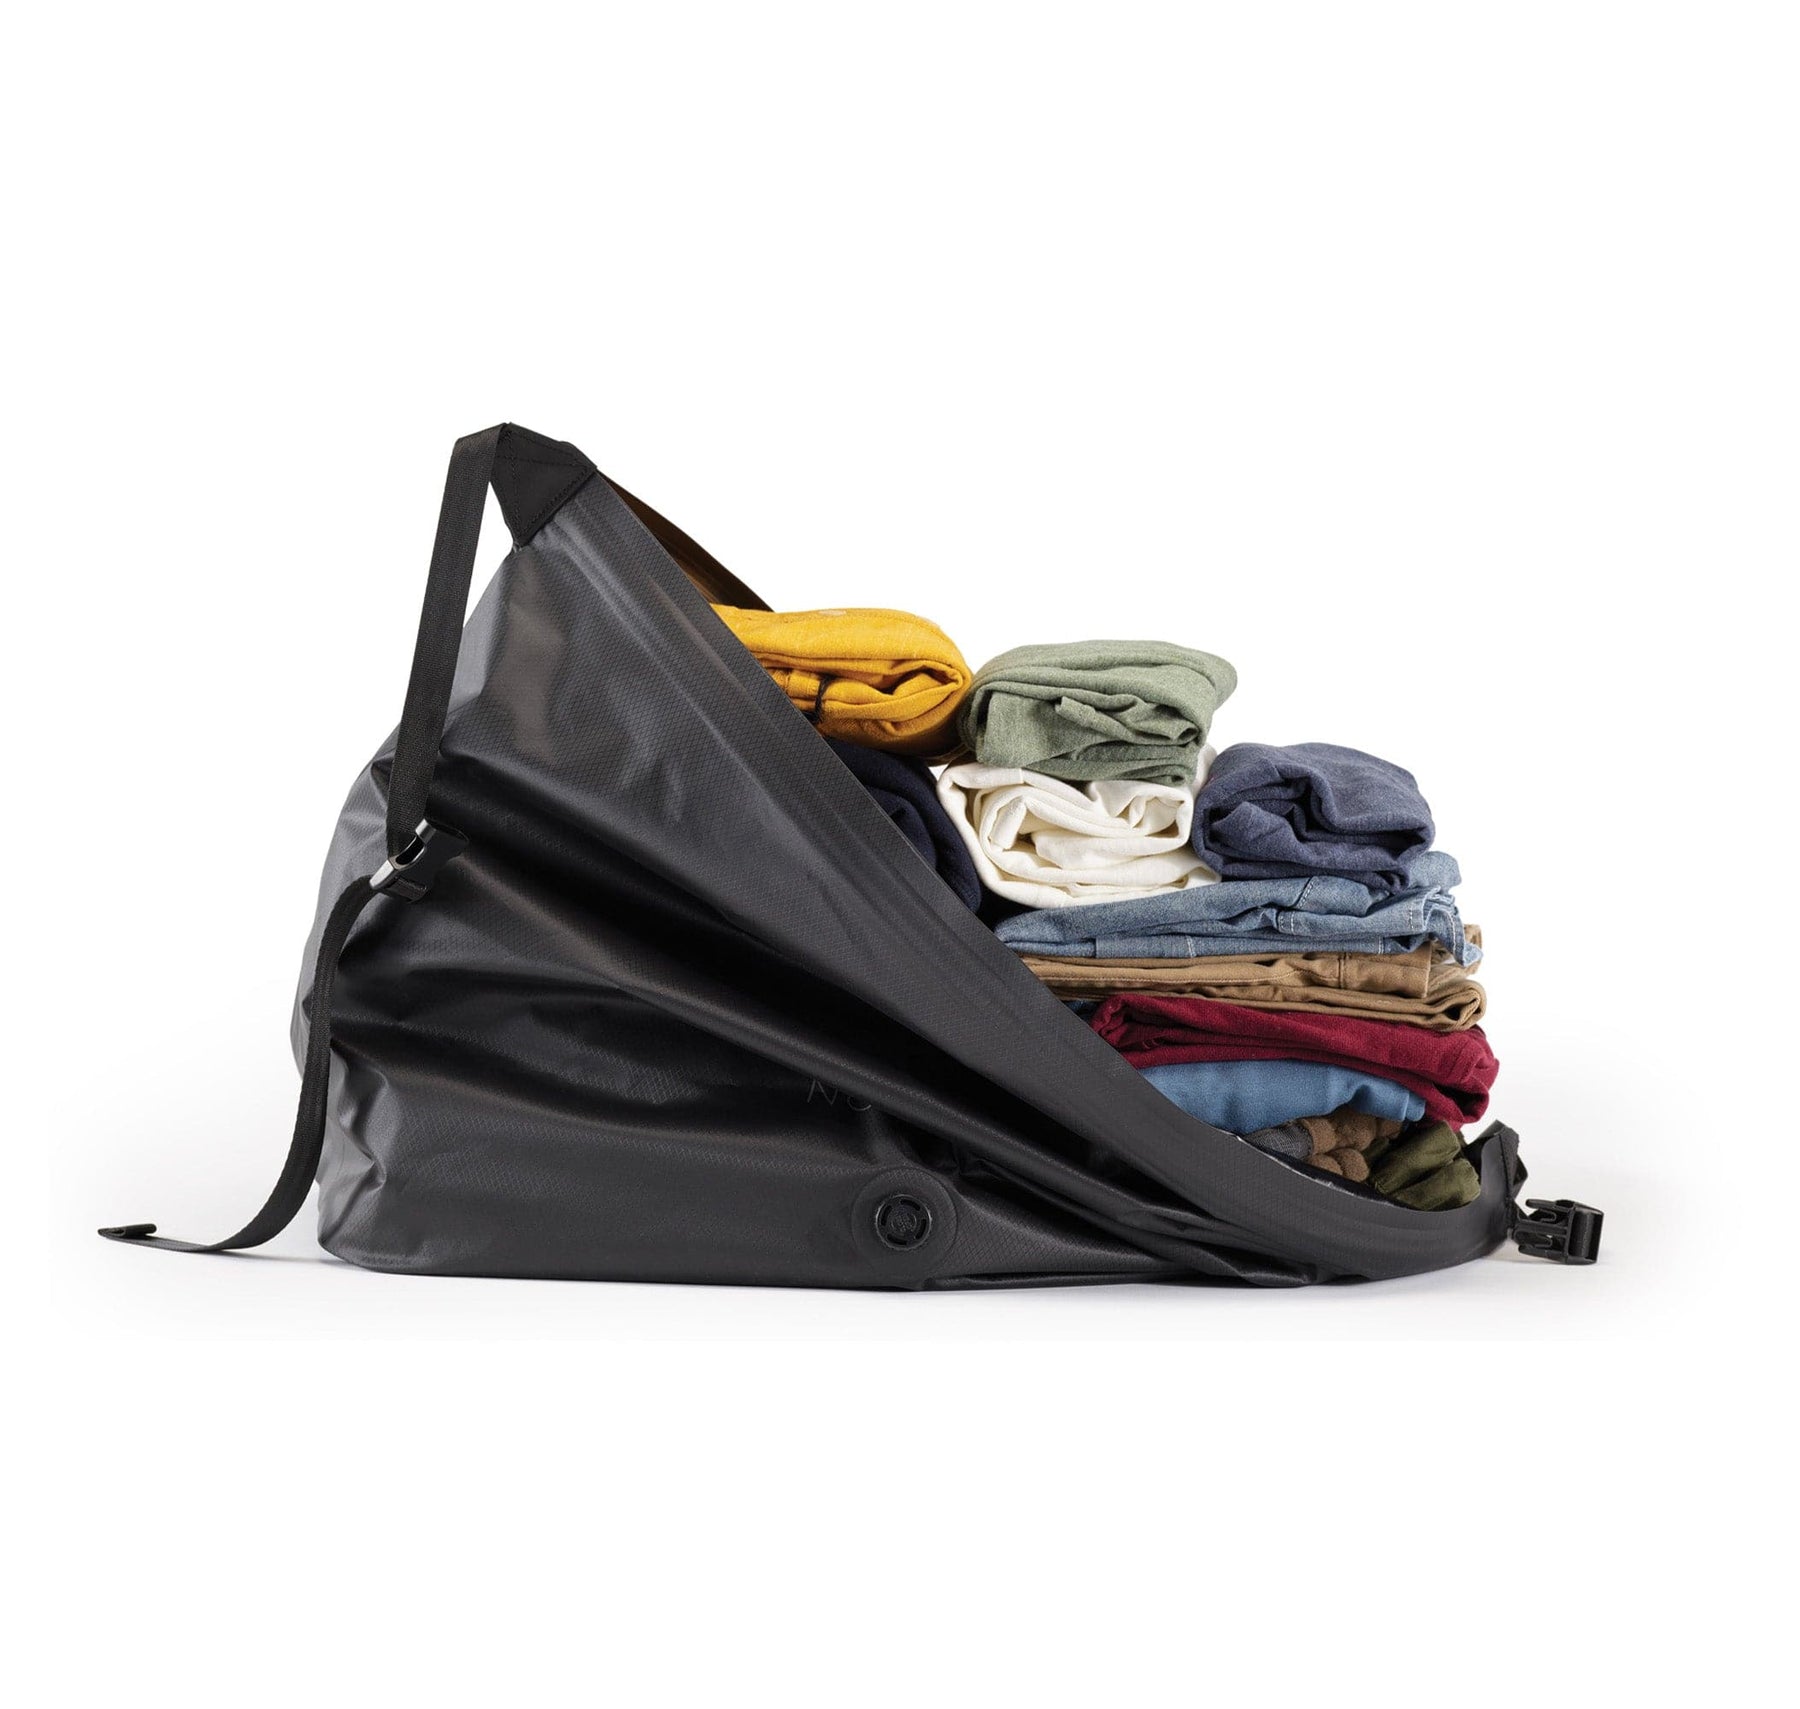 Vacuum Storage Bags 20 Pack in 3 Sizes – urban nomad